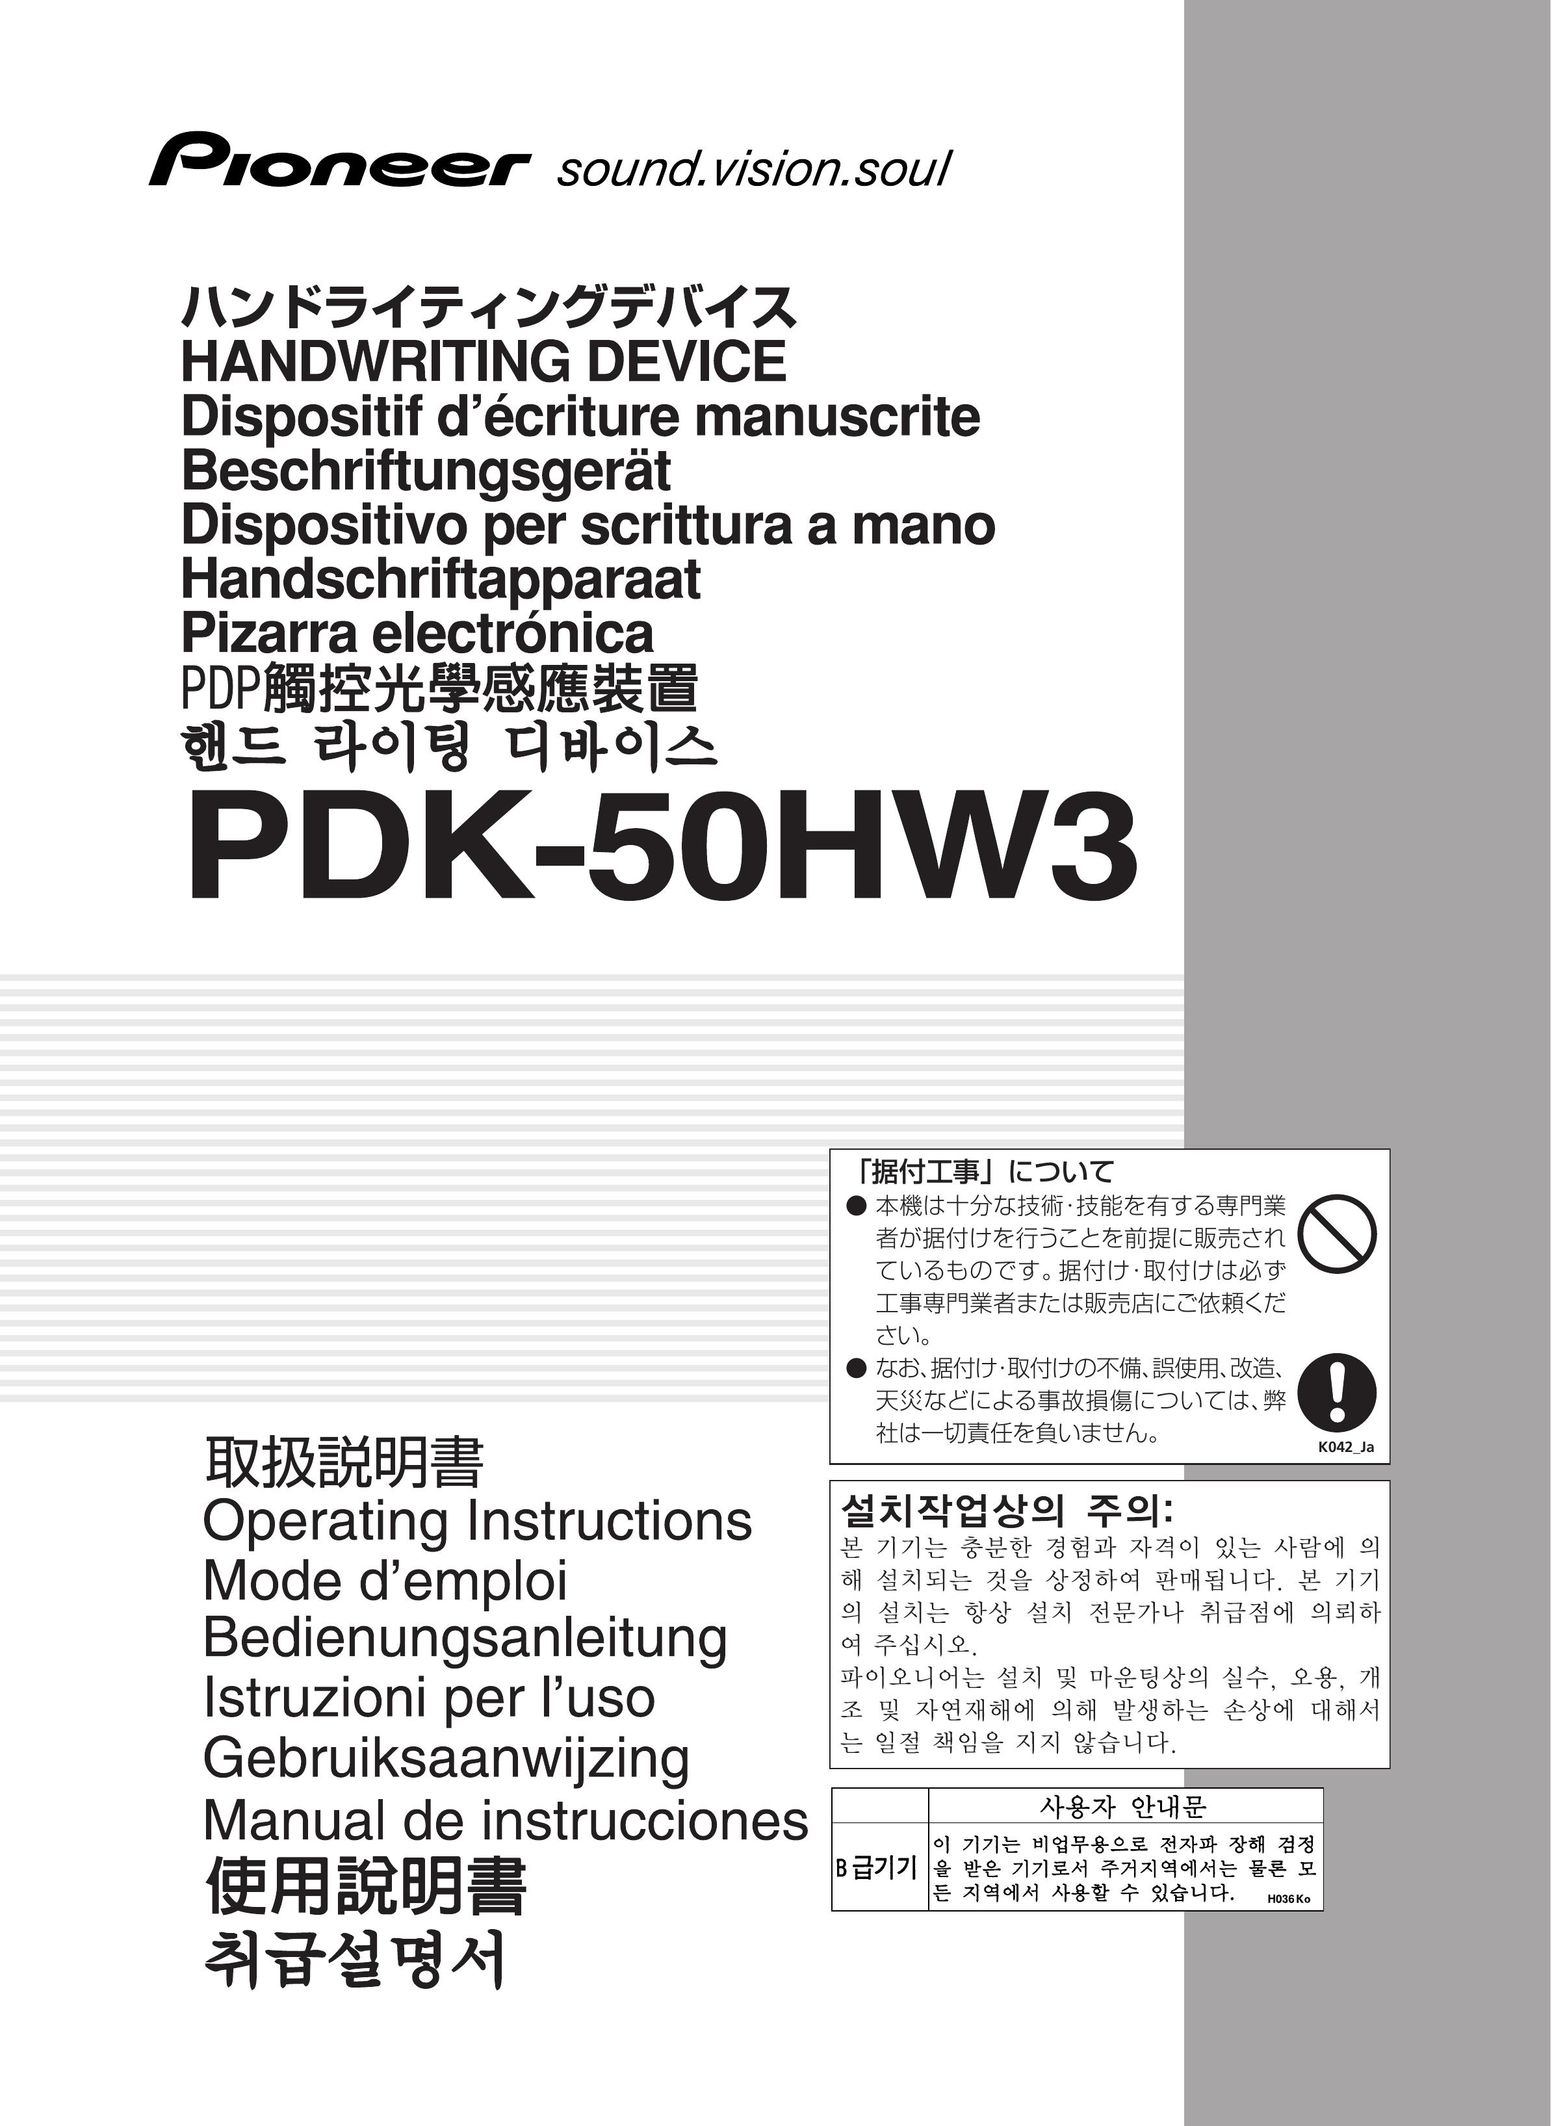 8x8 PDK-50HW3 Two-Way Radio User Manual